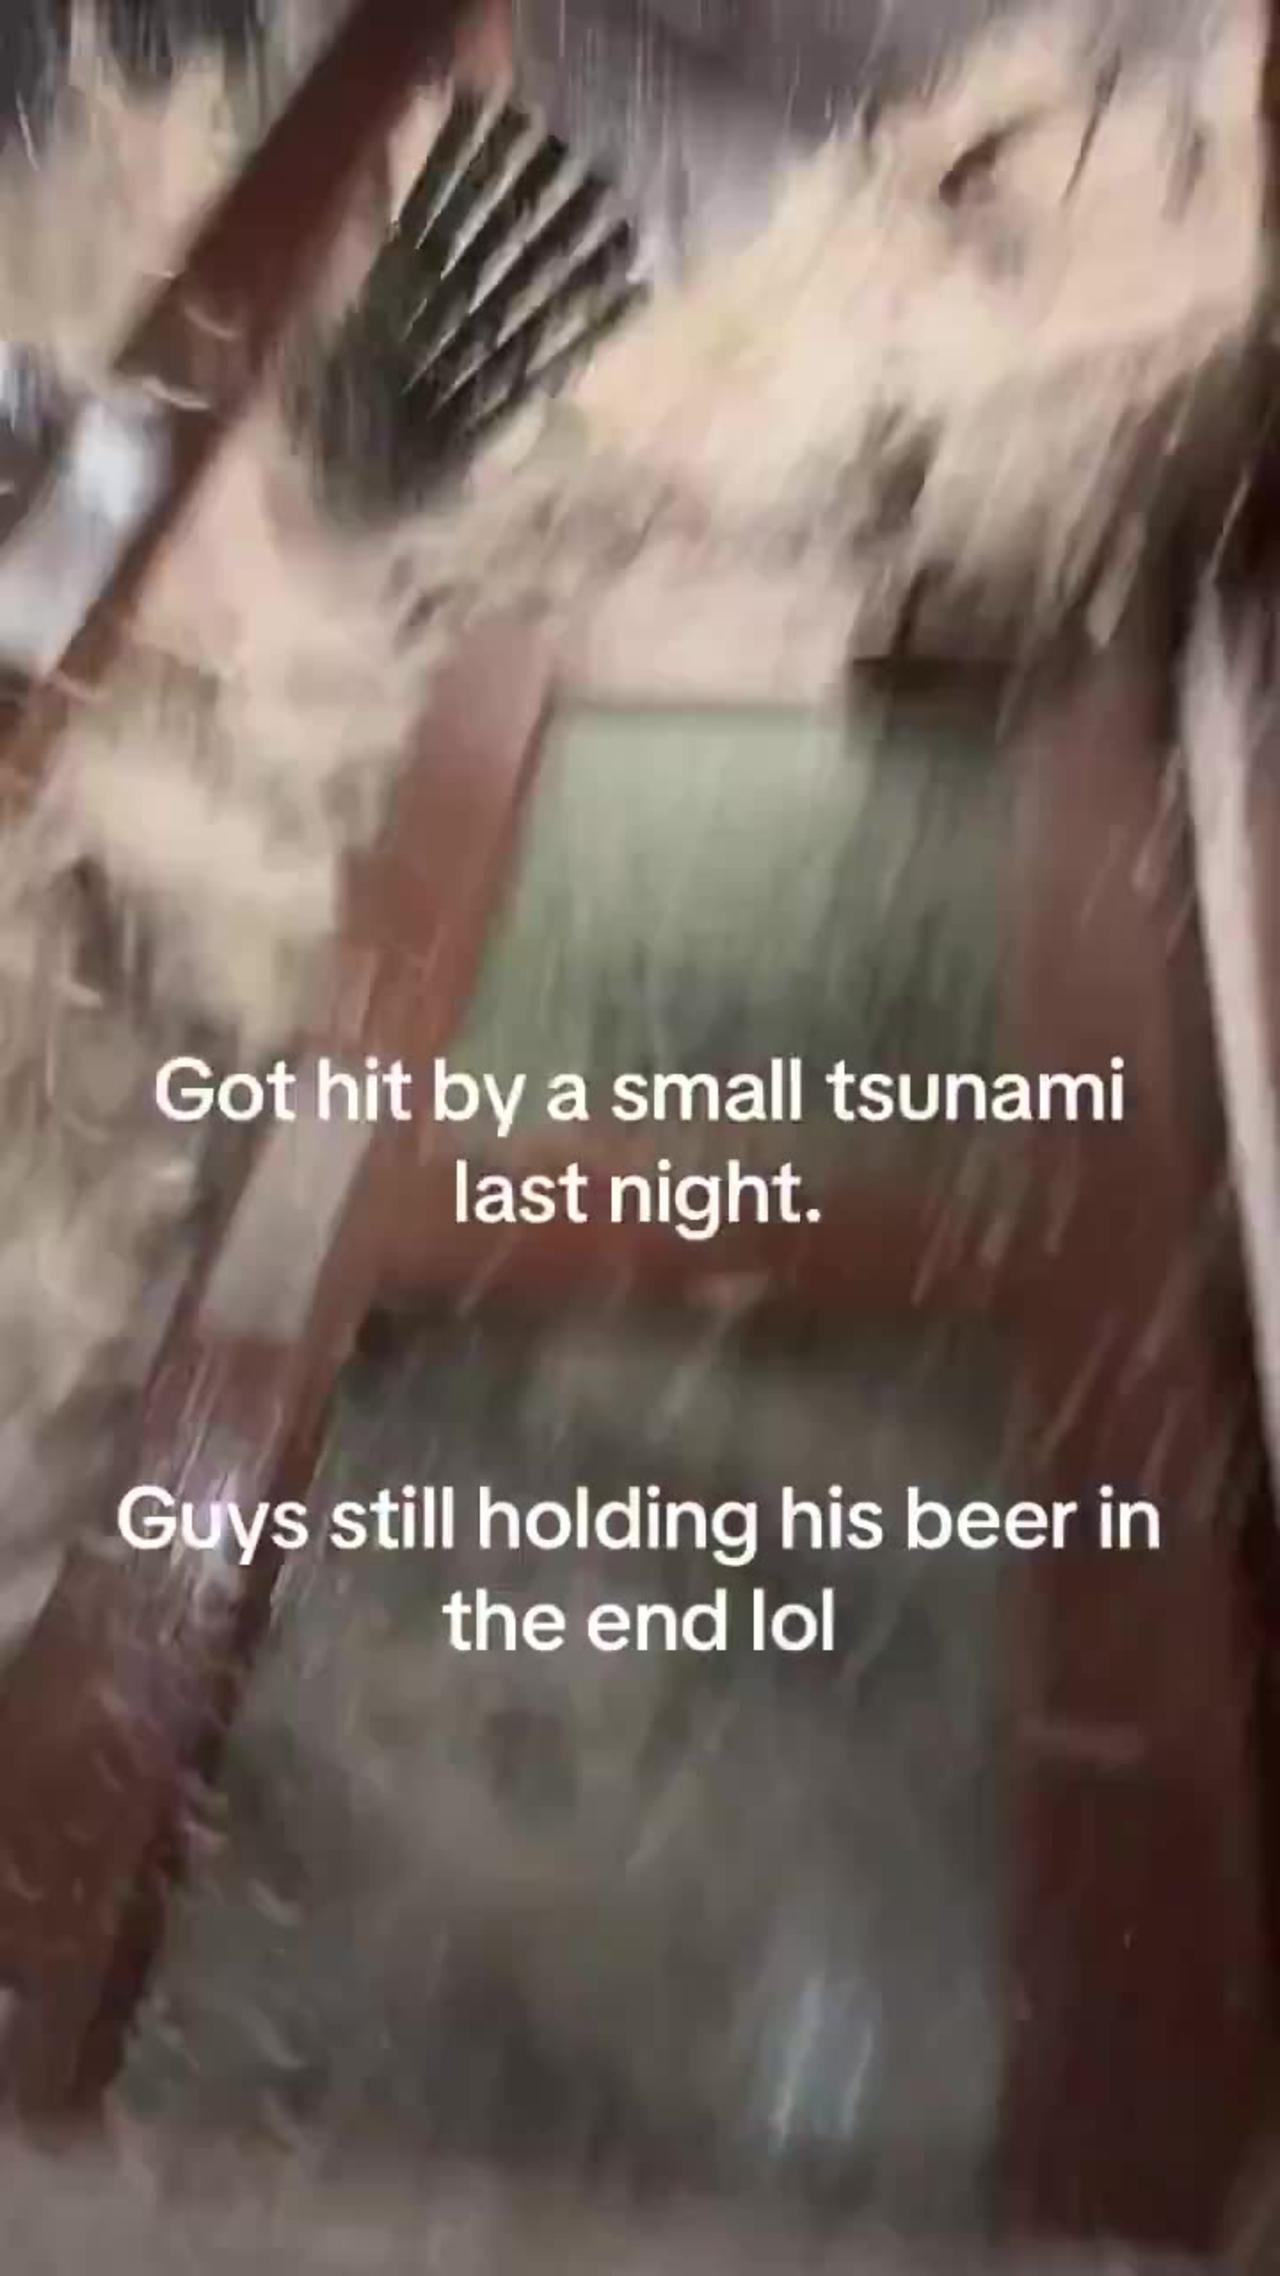 Guam Tsunami After Japan Earthquake